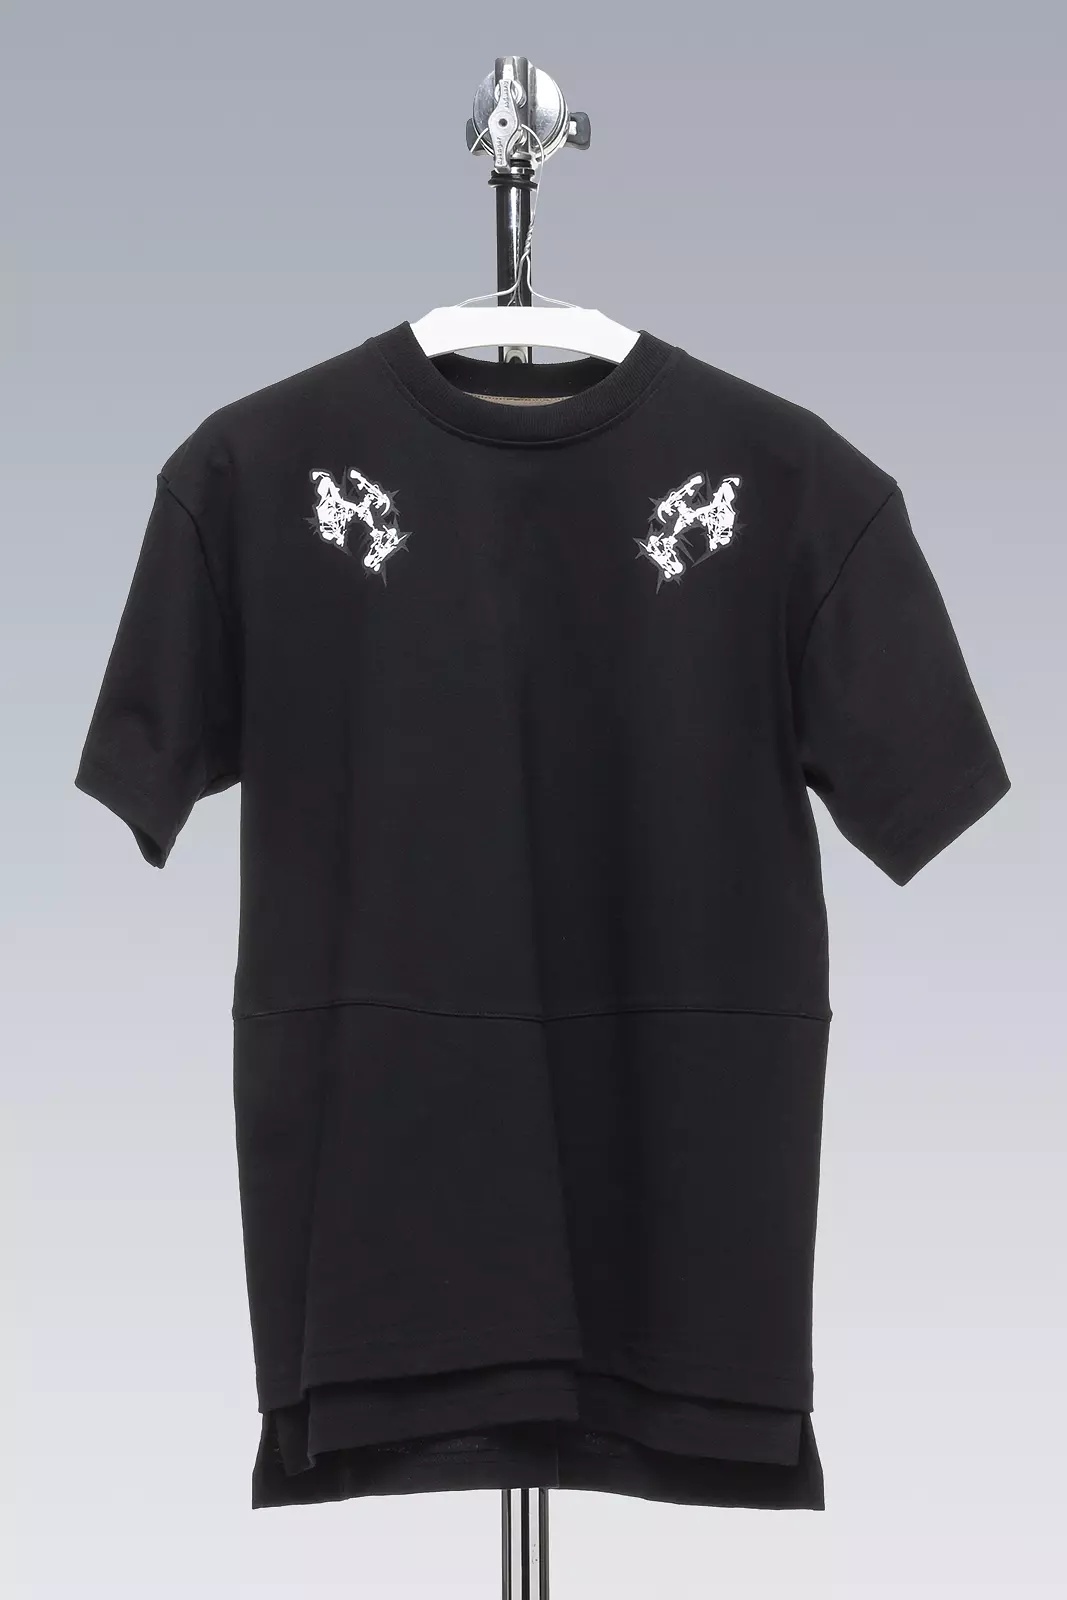 S28-PR-A 100% Orgnaic Cotton Short Sleeve T-shirt Black - 1